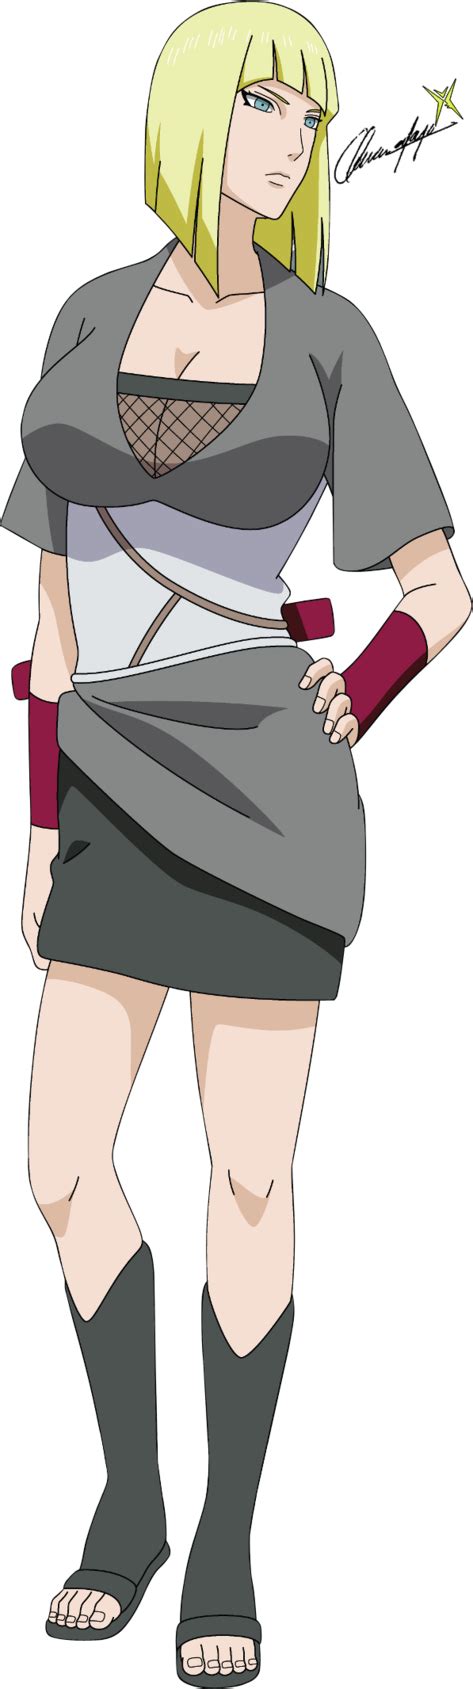 Samui By Rokkx On Deviantart Naruto Girls Anime Naruto Characters